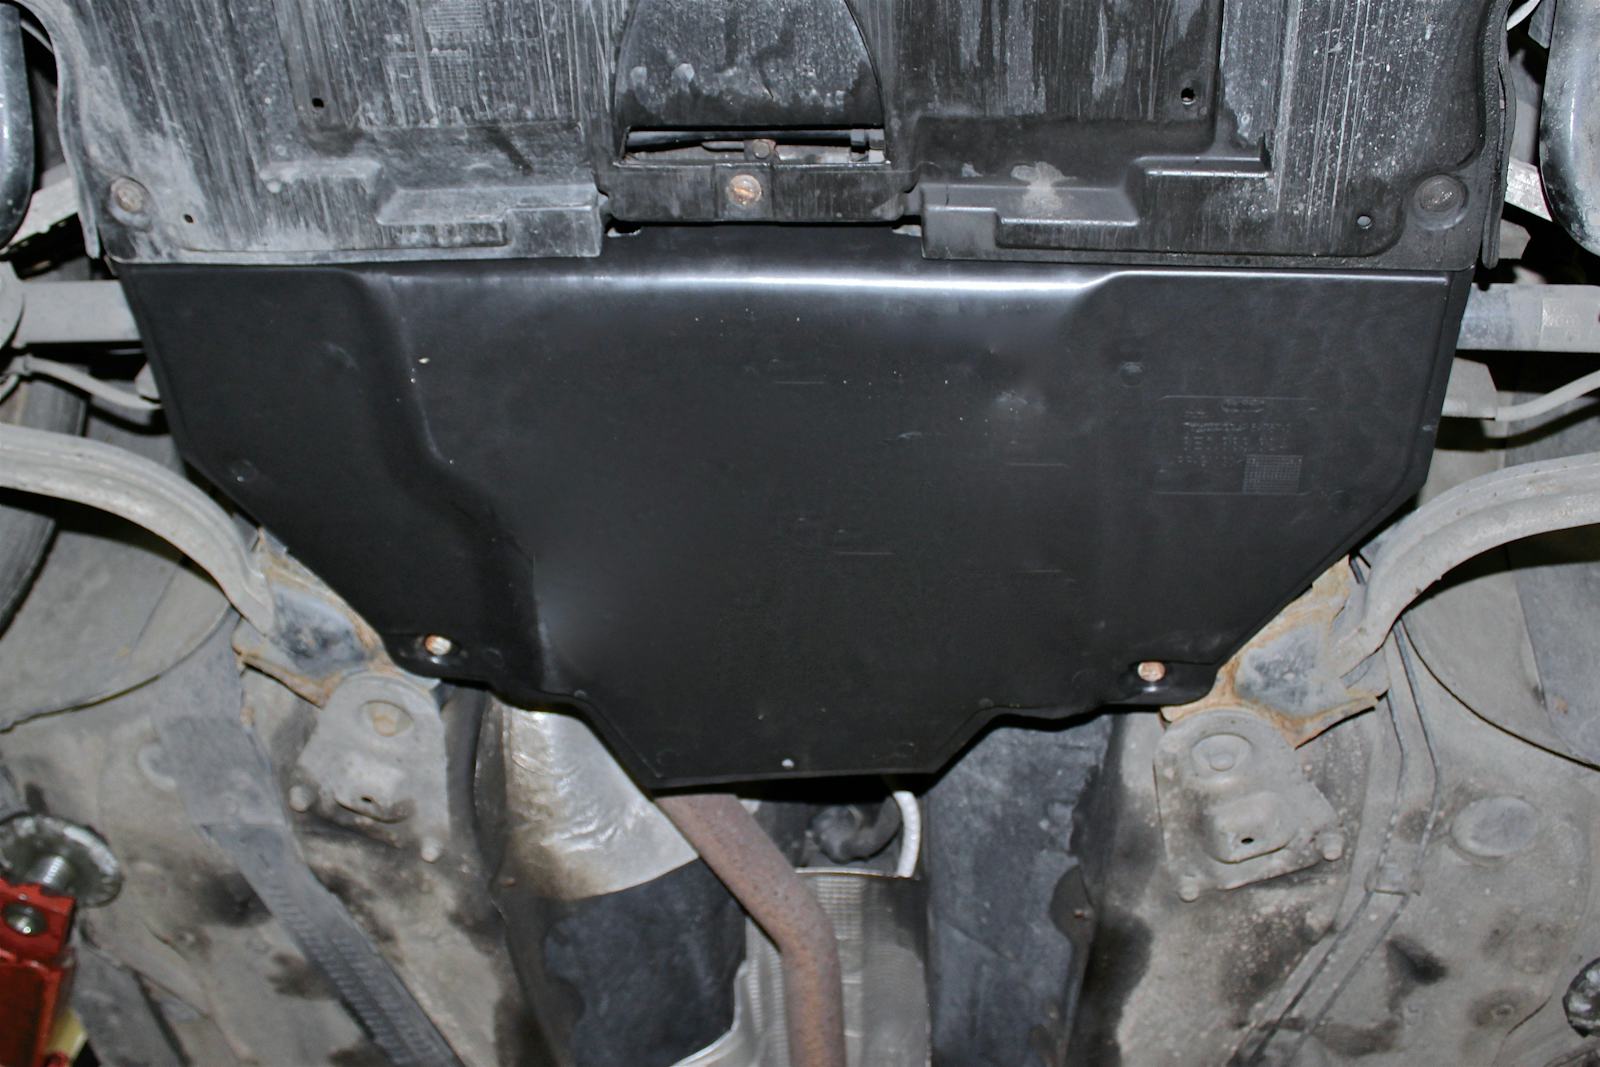 Plate under motor